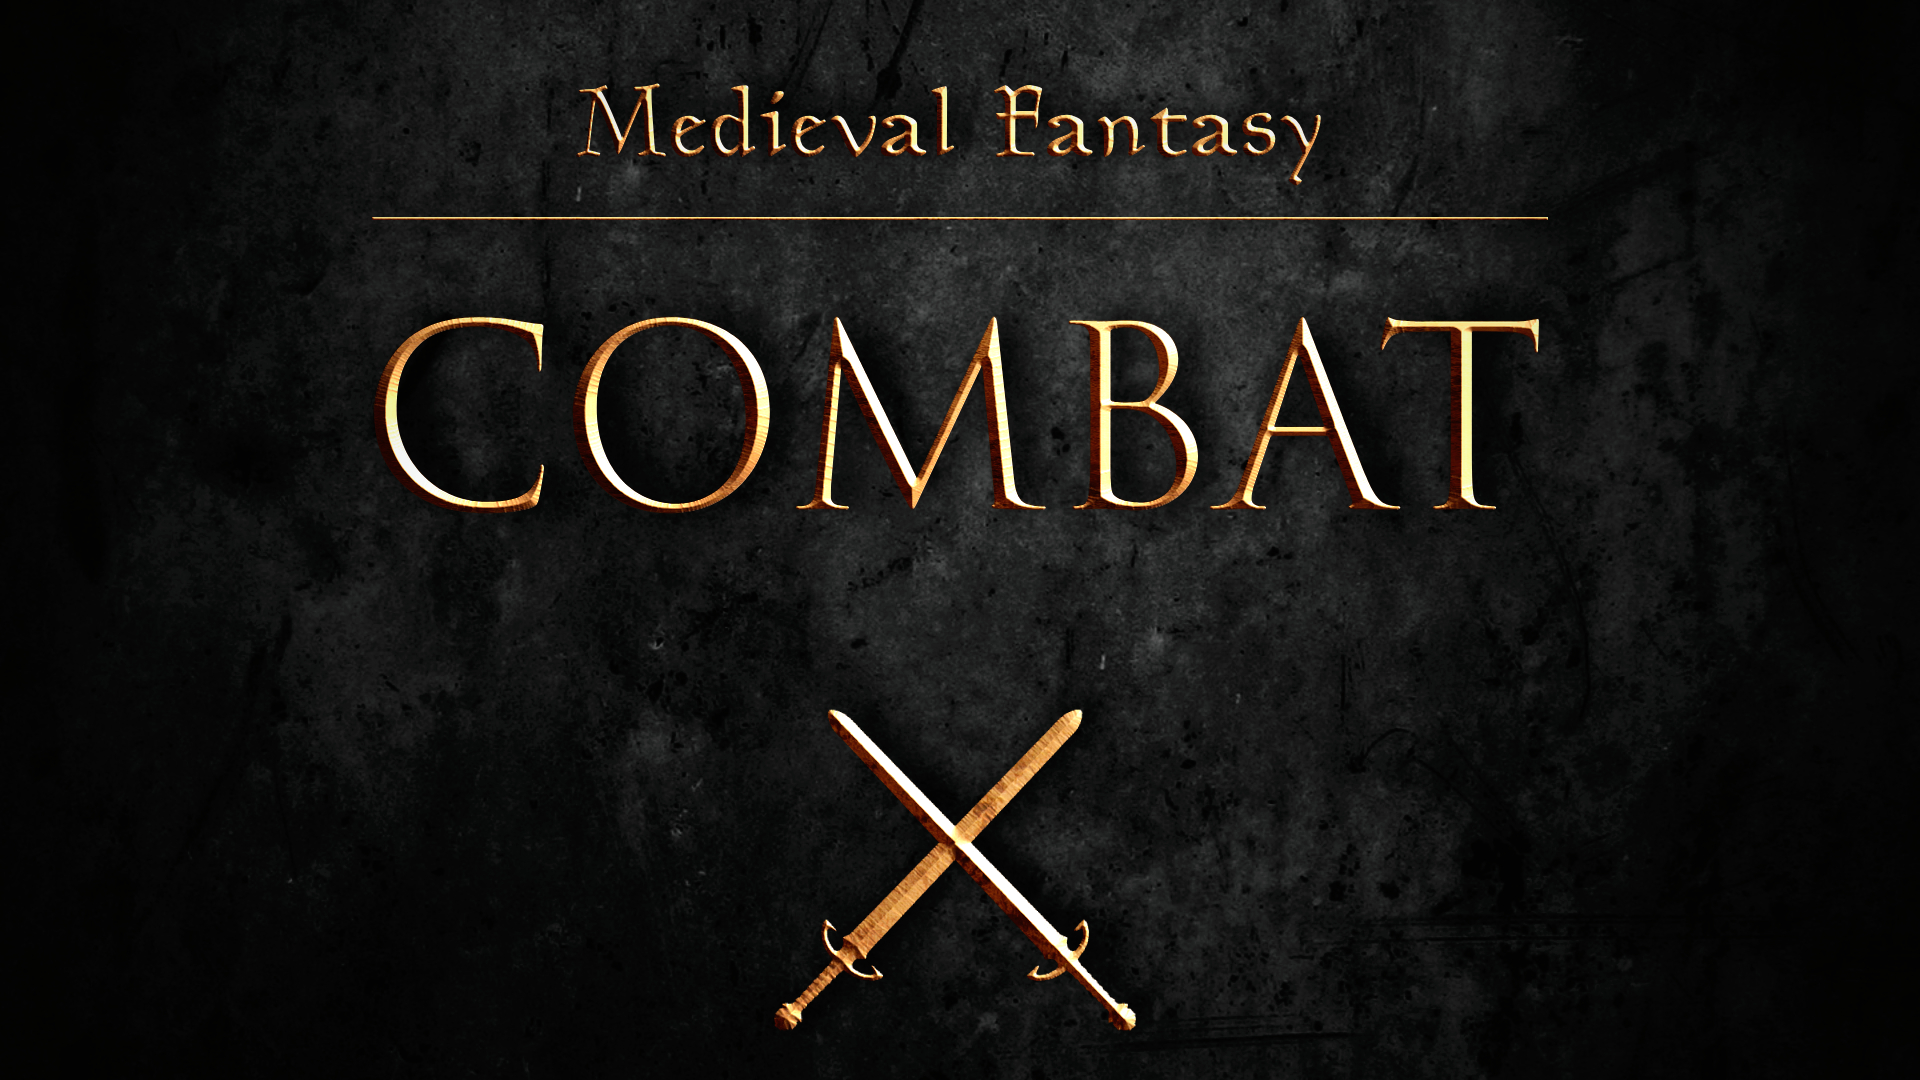 Medieval Fantasy Combat II